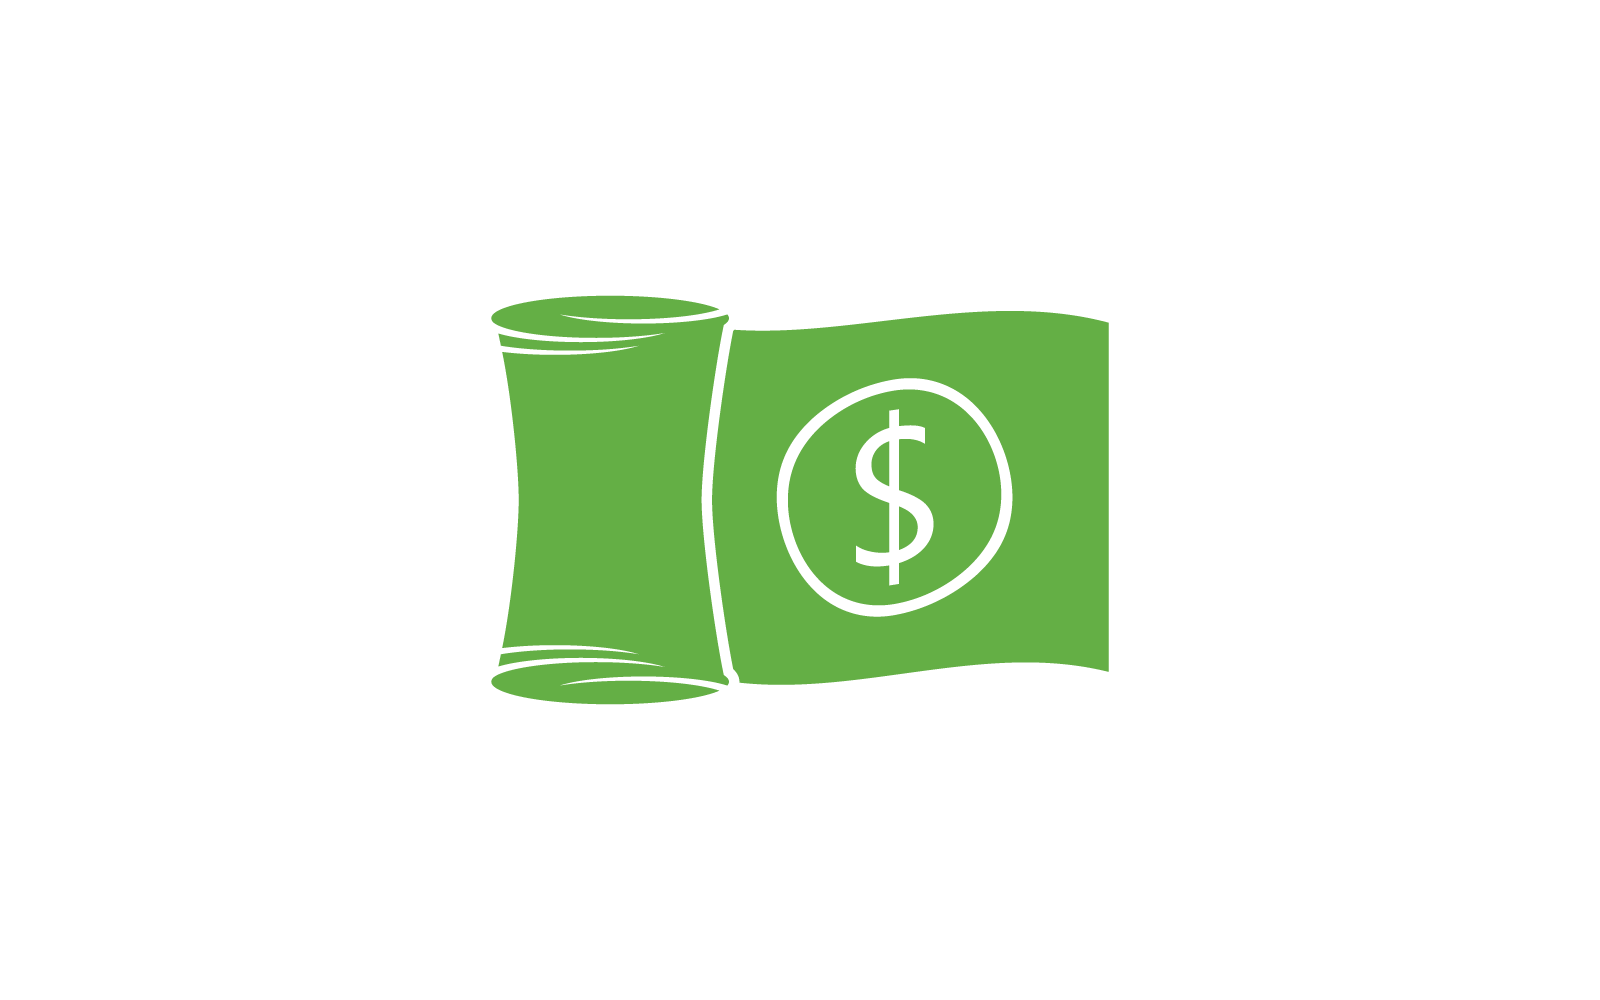 Business money banking logo illustration vecteur design plat